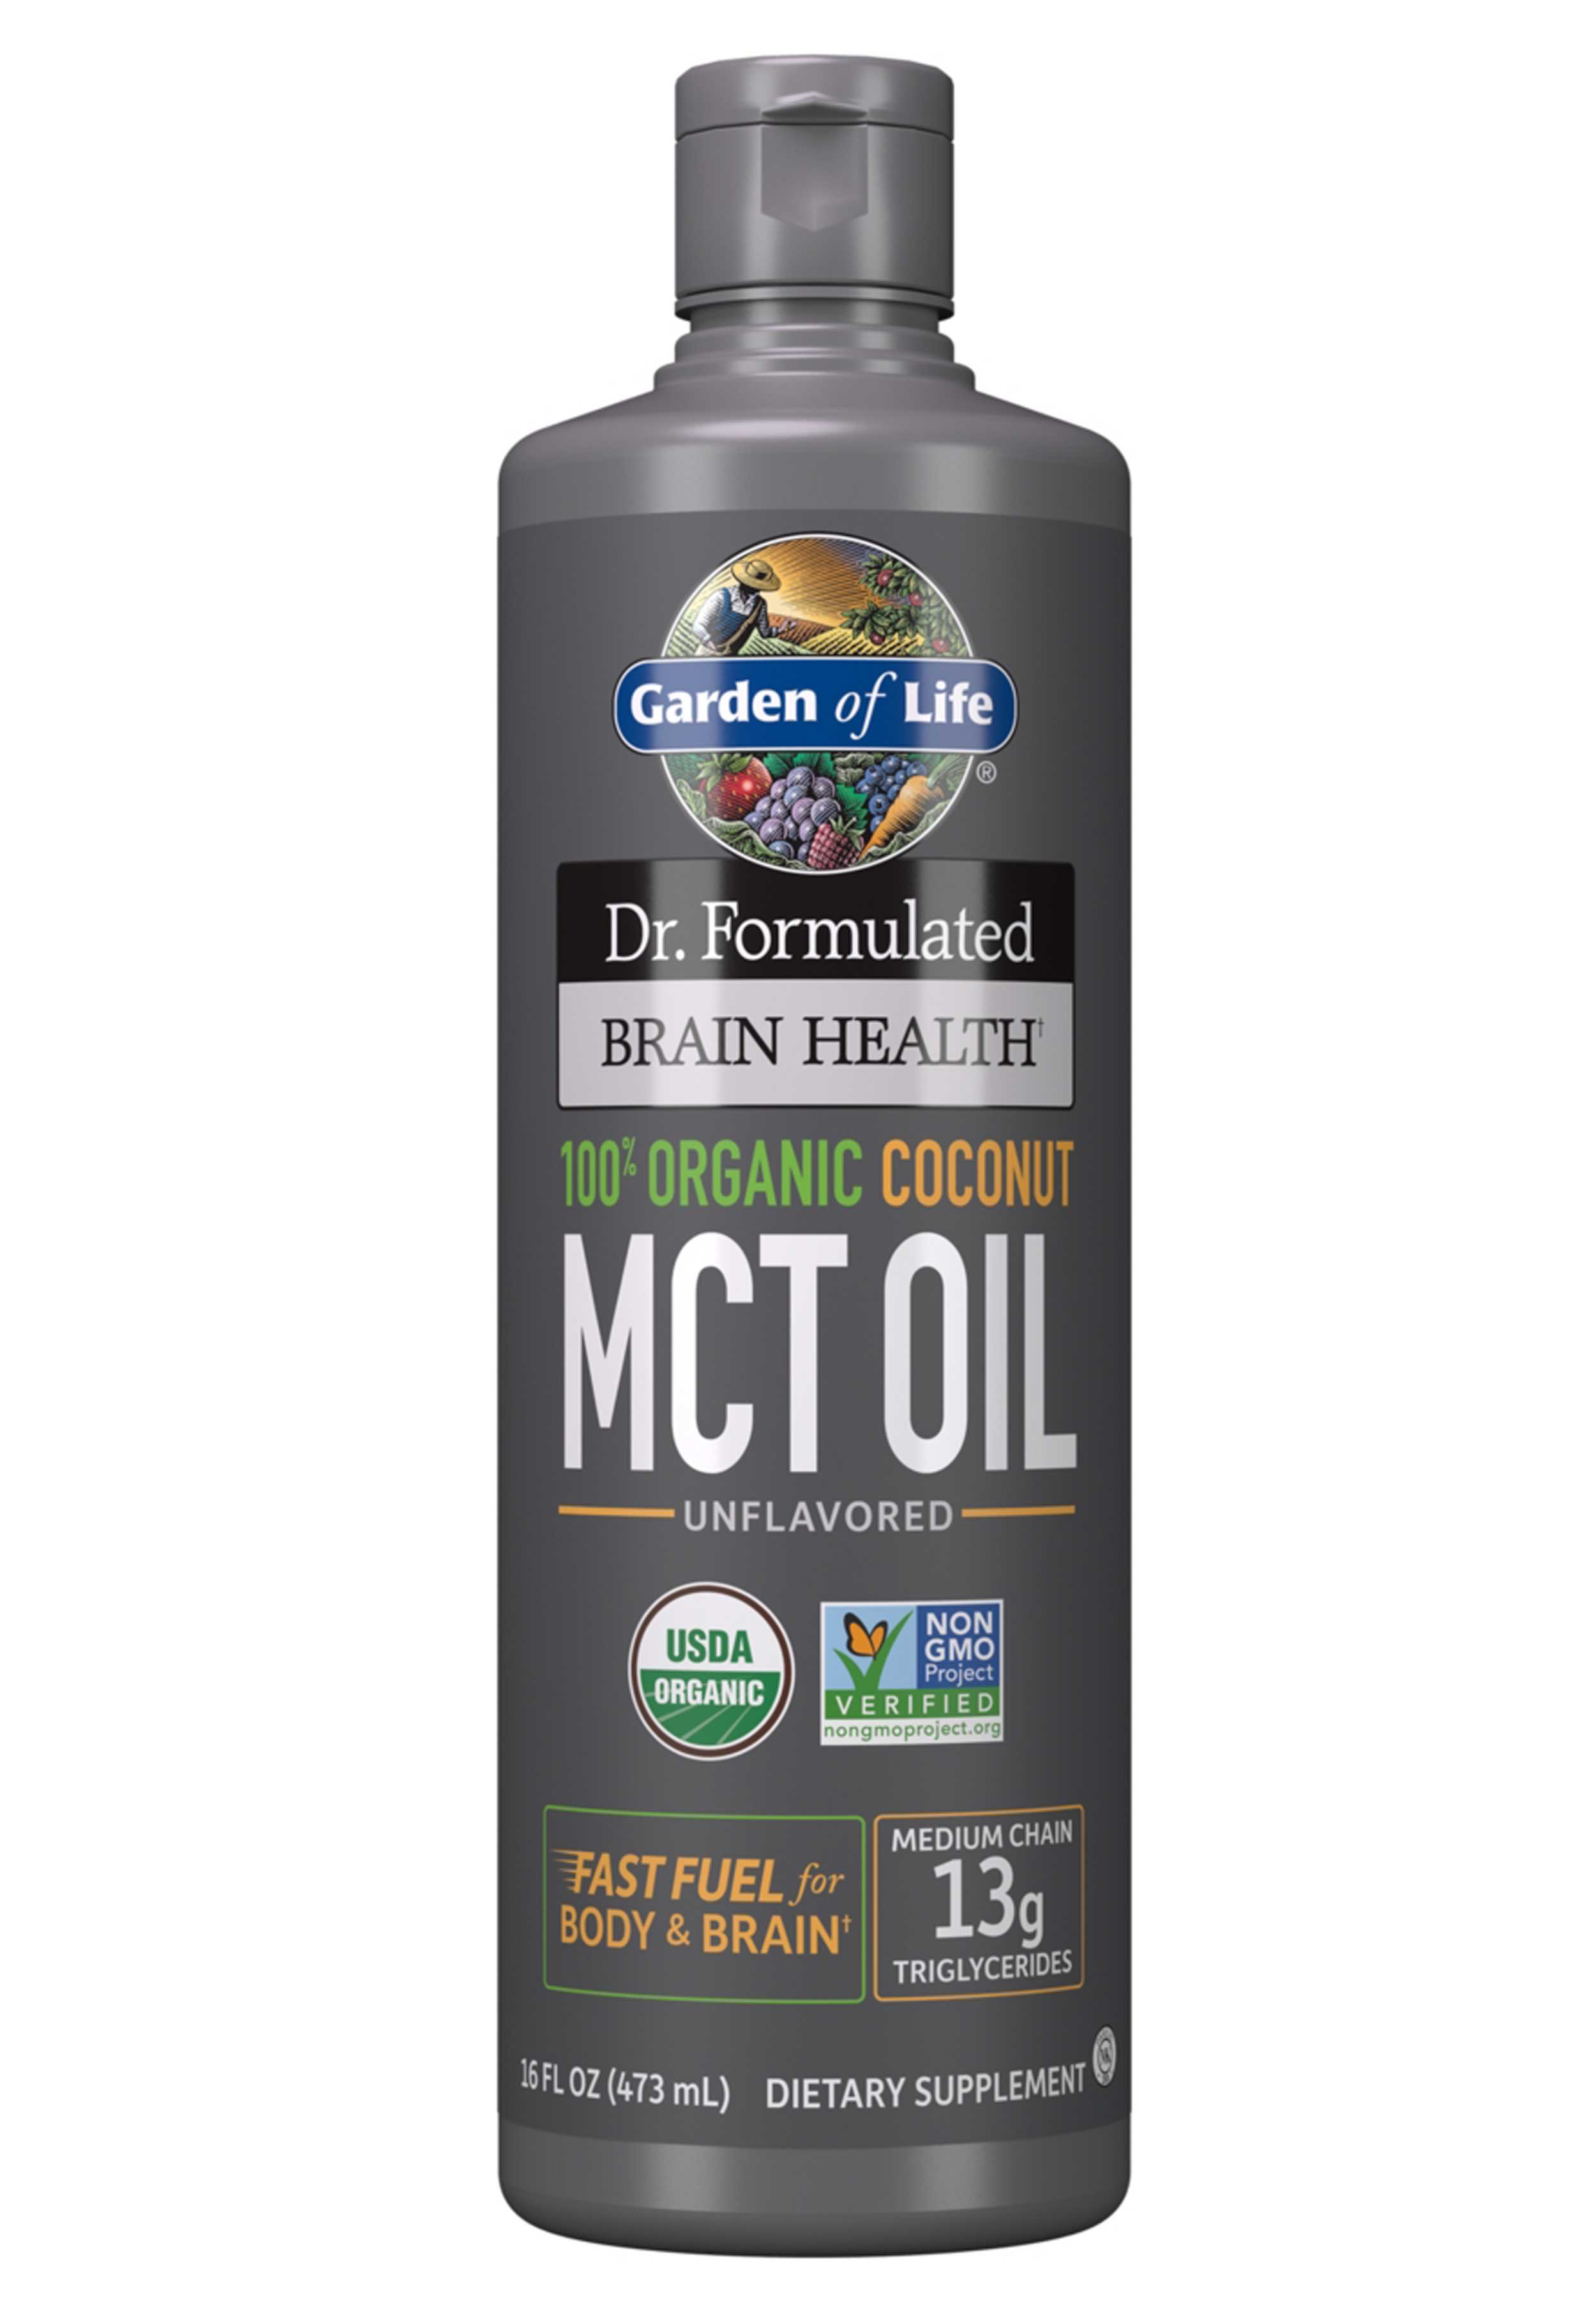 Garden of Life Dr. Formulated Brain Health 100% Organic Coconut MCT Oil